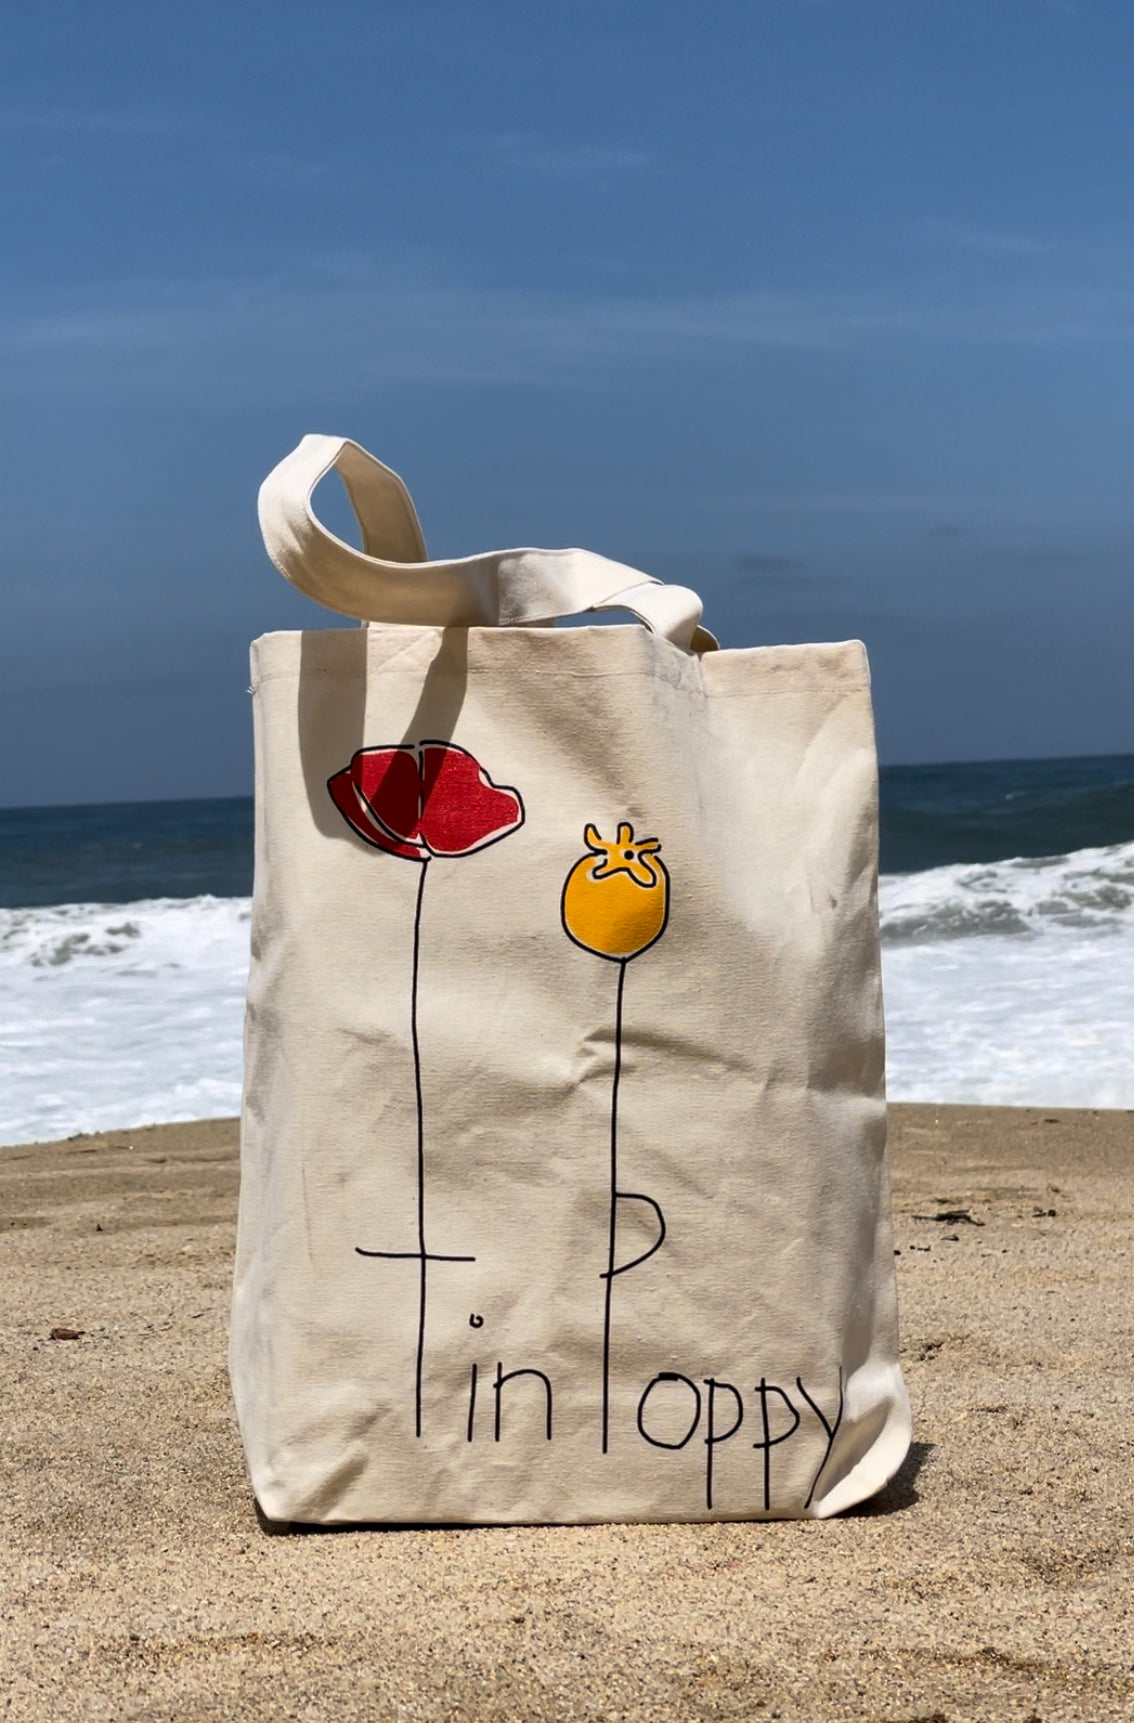 Tin Poppy tote bag on a beach